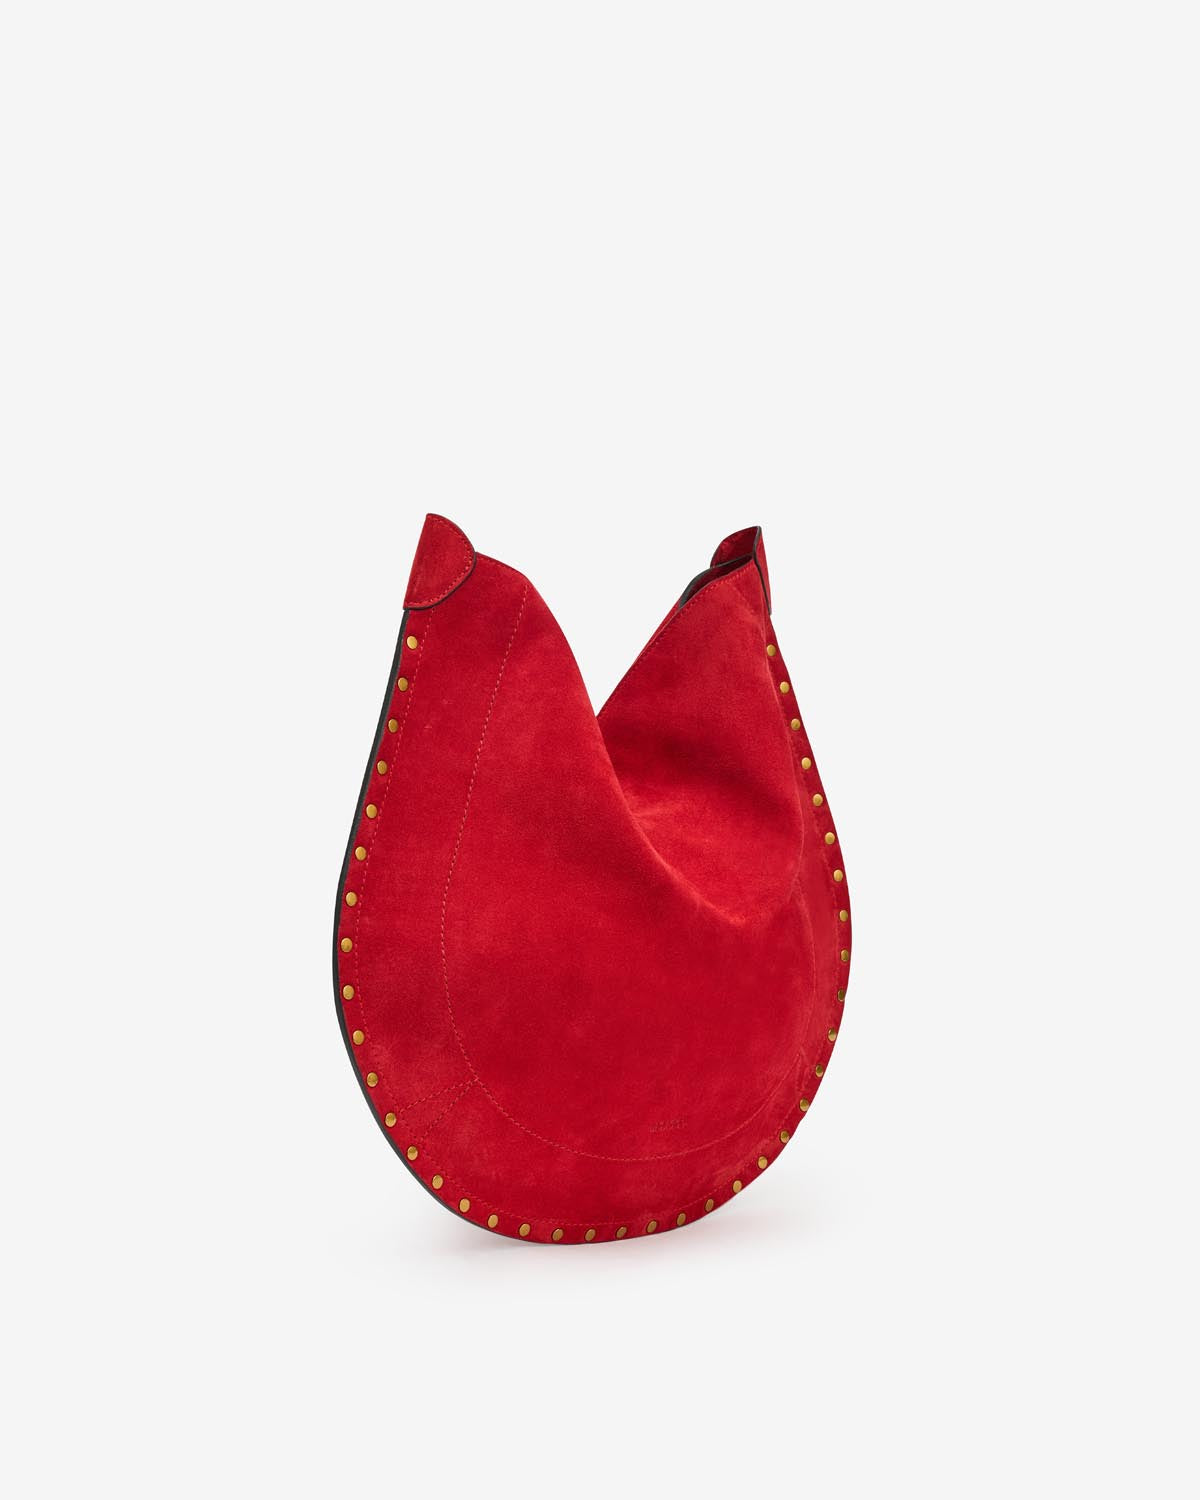 Oskan hobo soft bag Woman Scarlet red 1